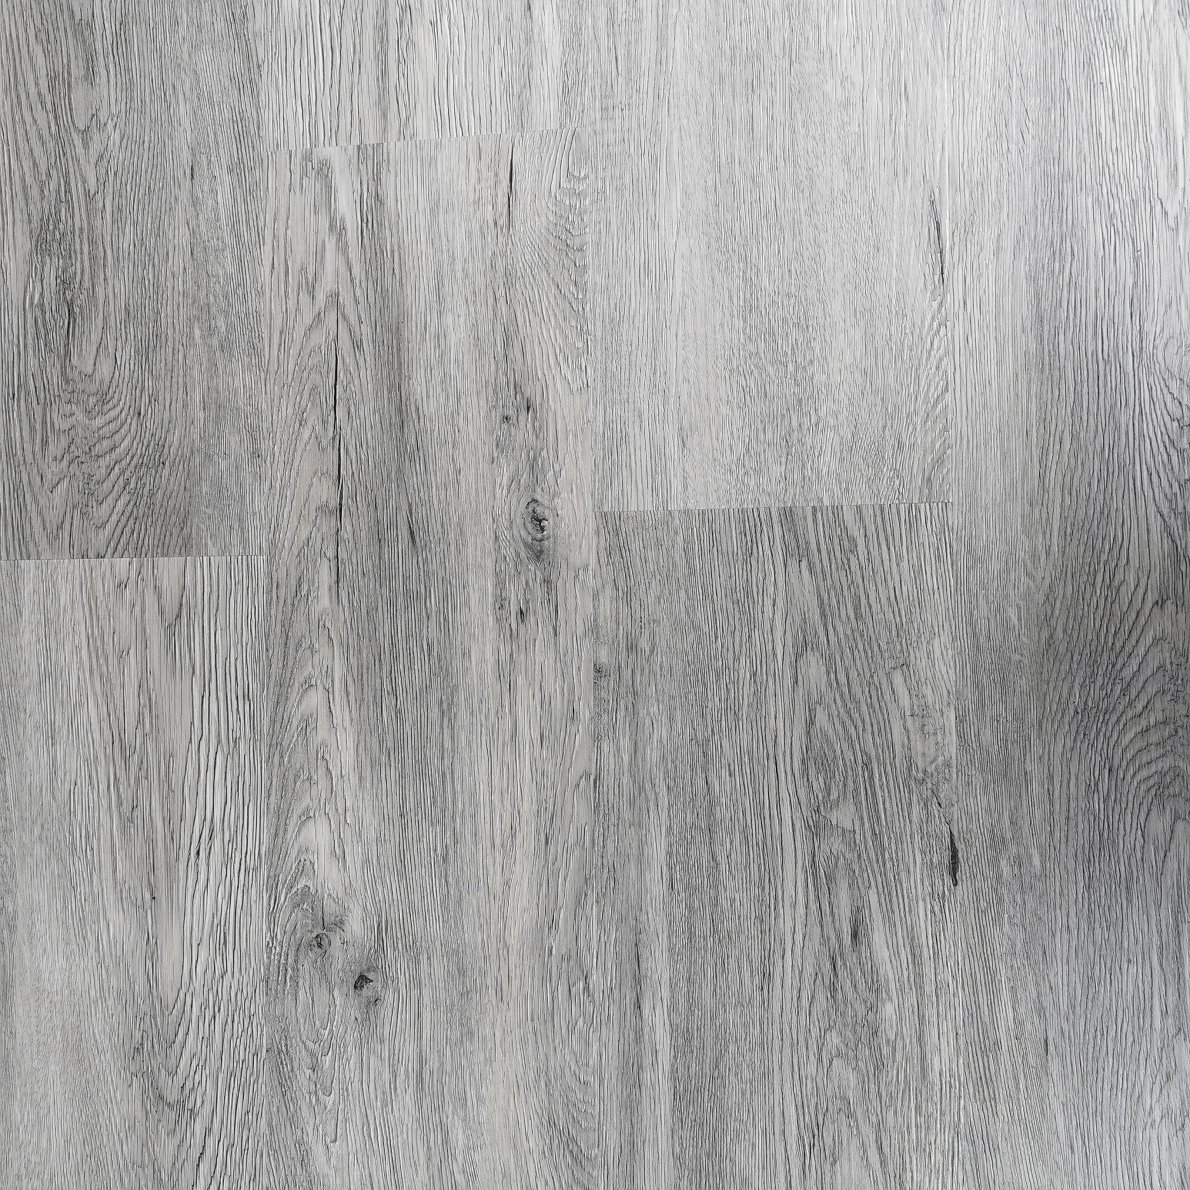 Good Quality Cobblestone Vinyl Flooring -
 KANGTON click LVT flooring with free sample and factory price – Kangton